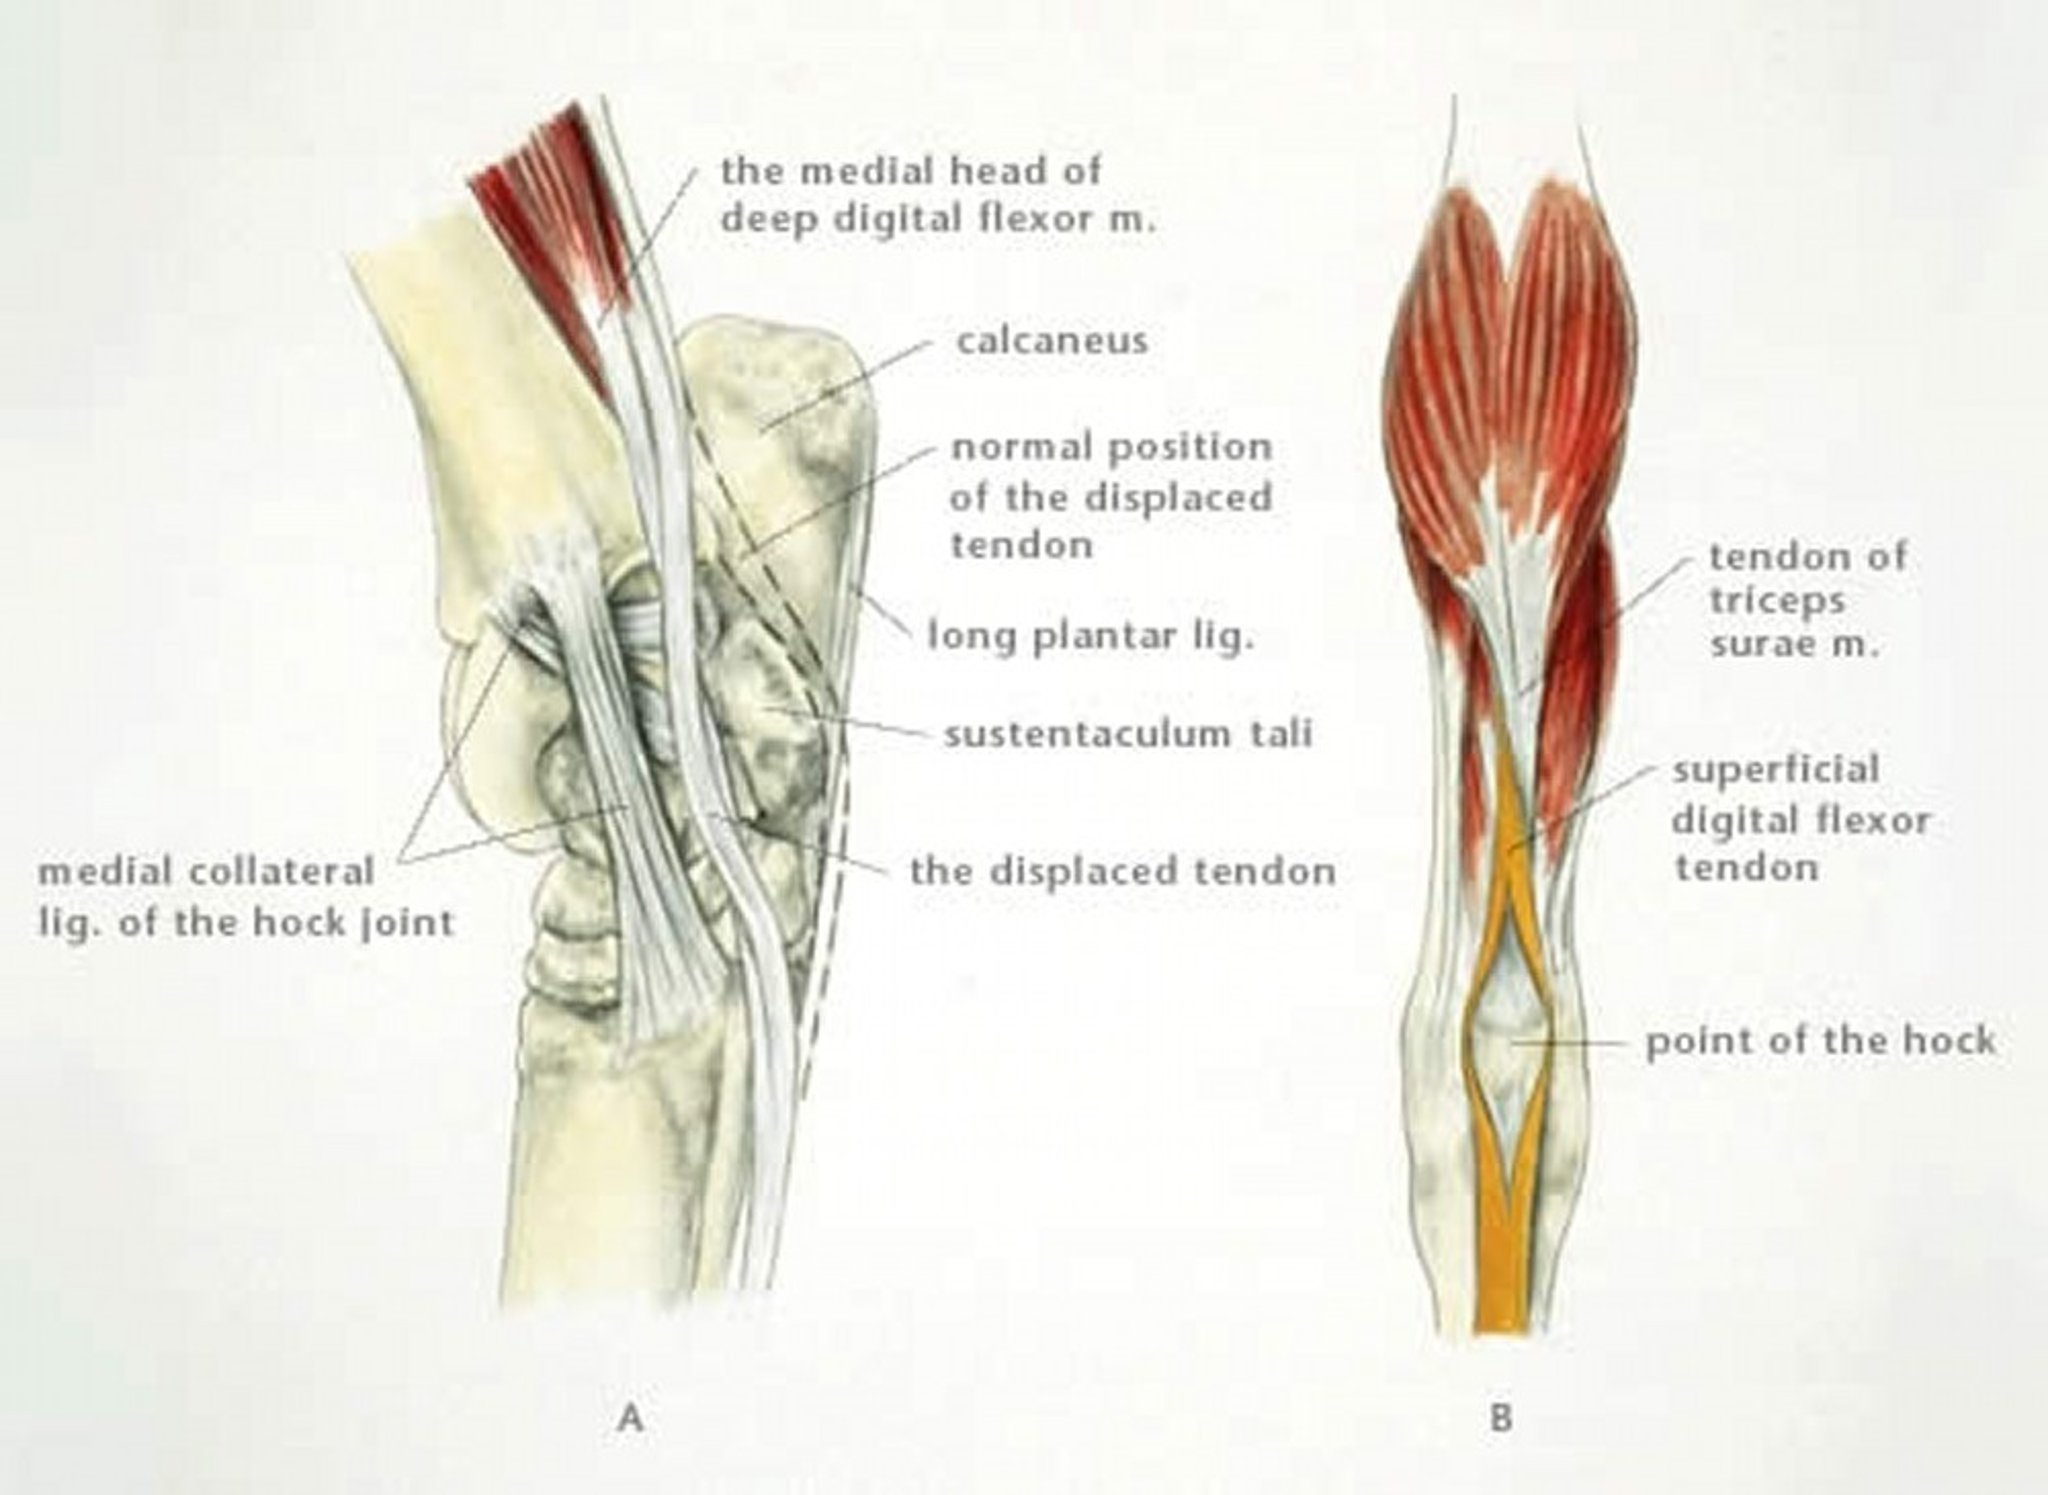 Displacement of deep digital flexor tendon, rupture of superficial digital flexor tendon, horse